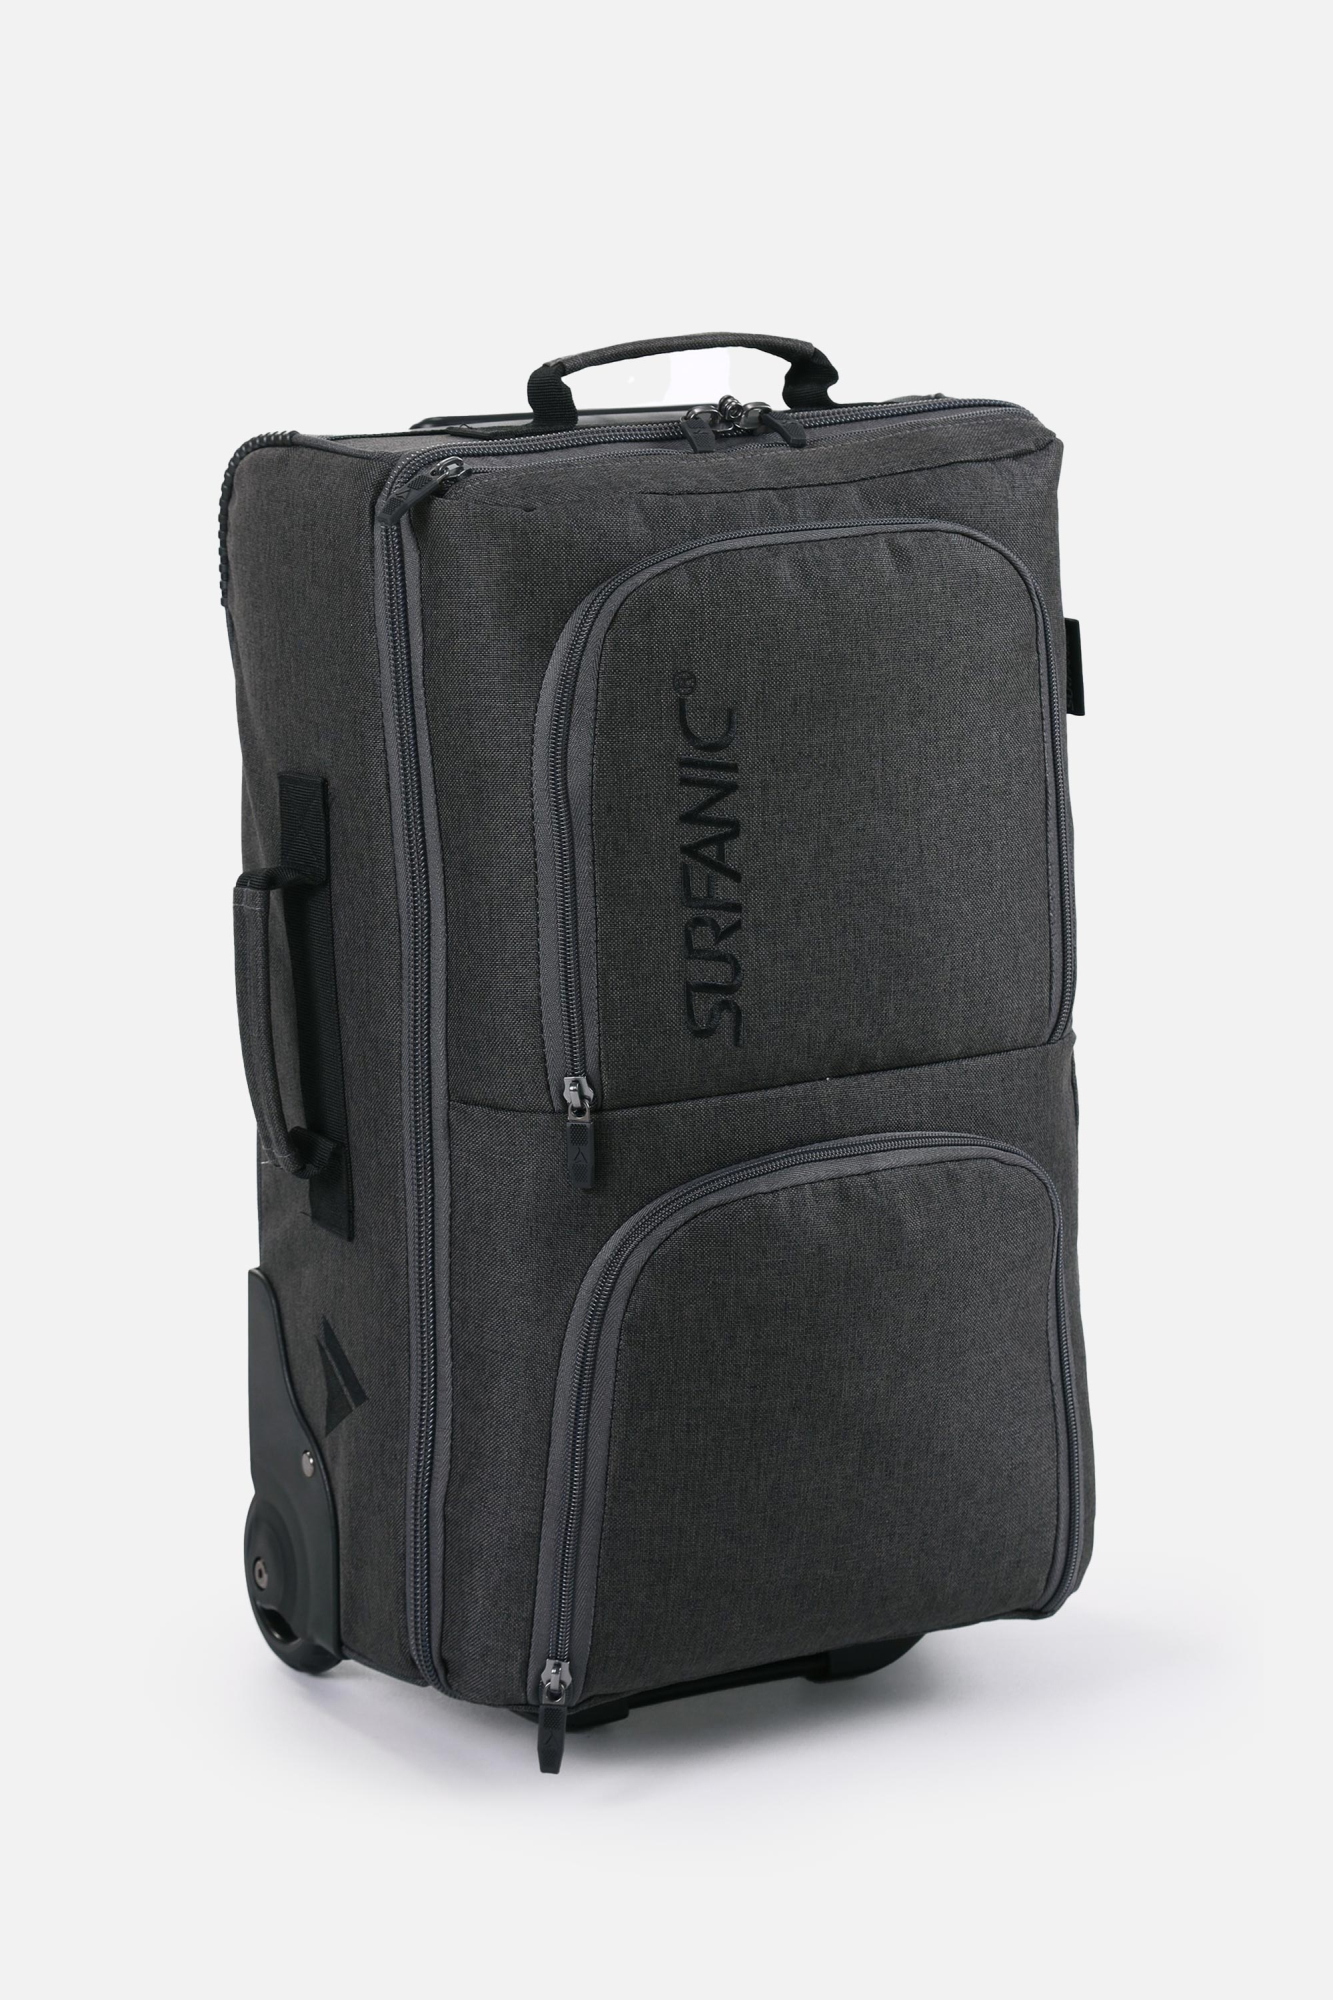 Surfanic Unisex Maxim 40 Roller Bag Grey - Size: 40 Litre